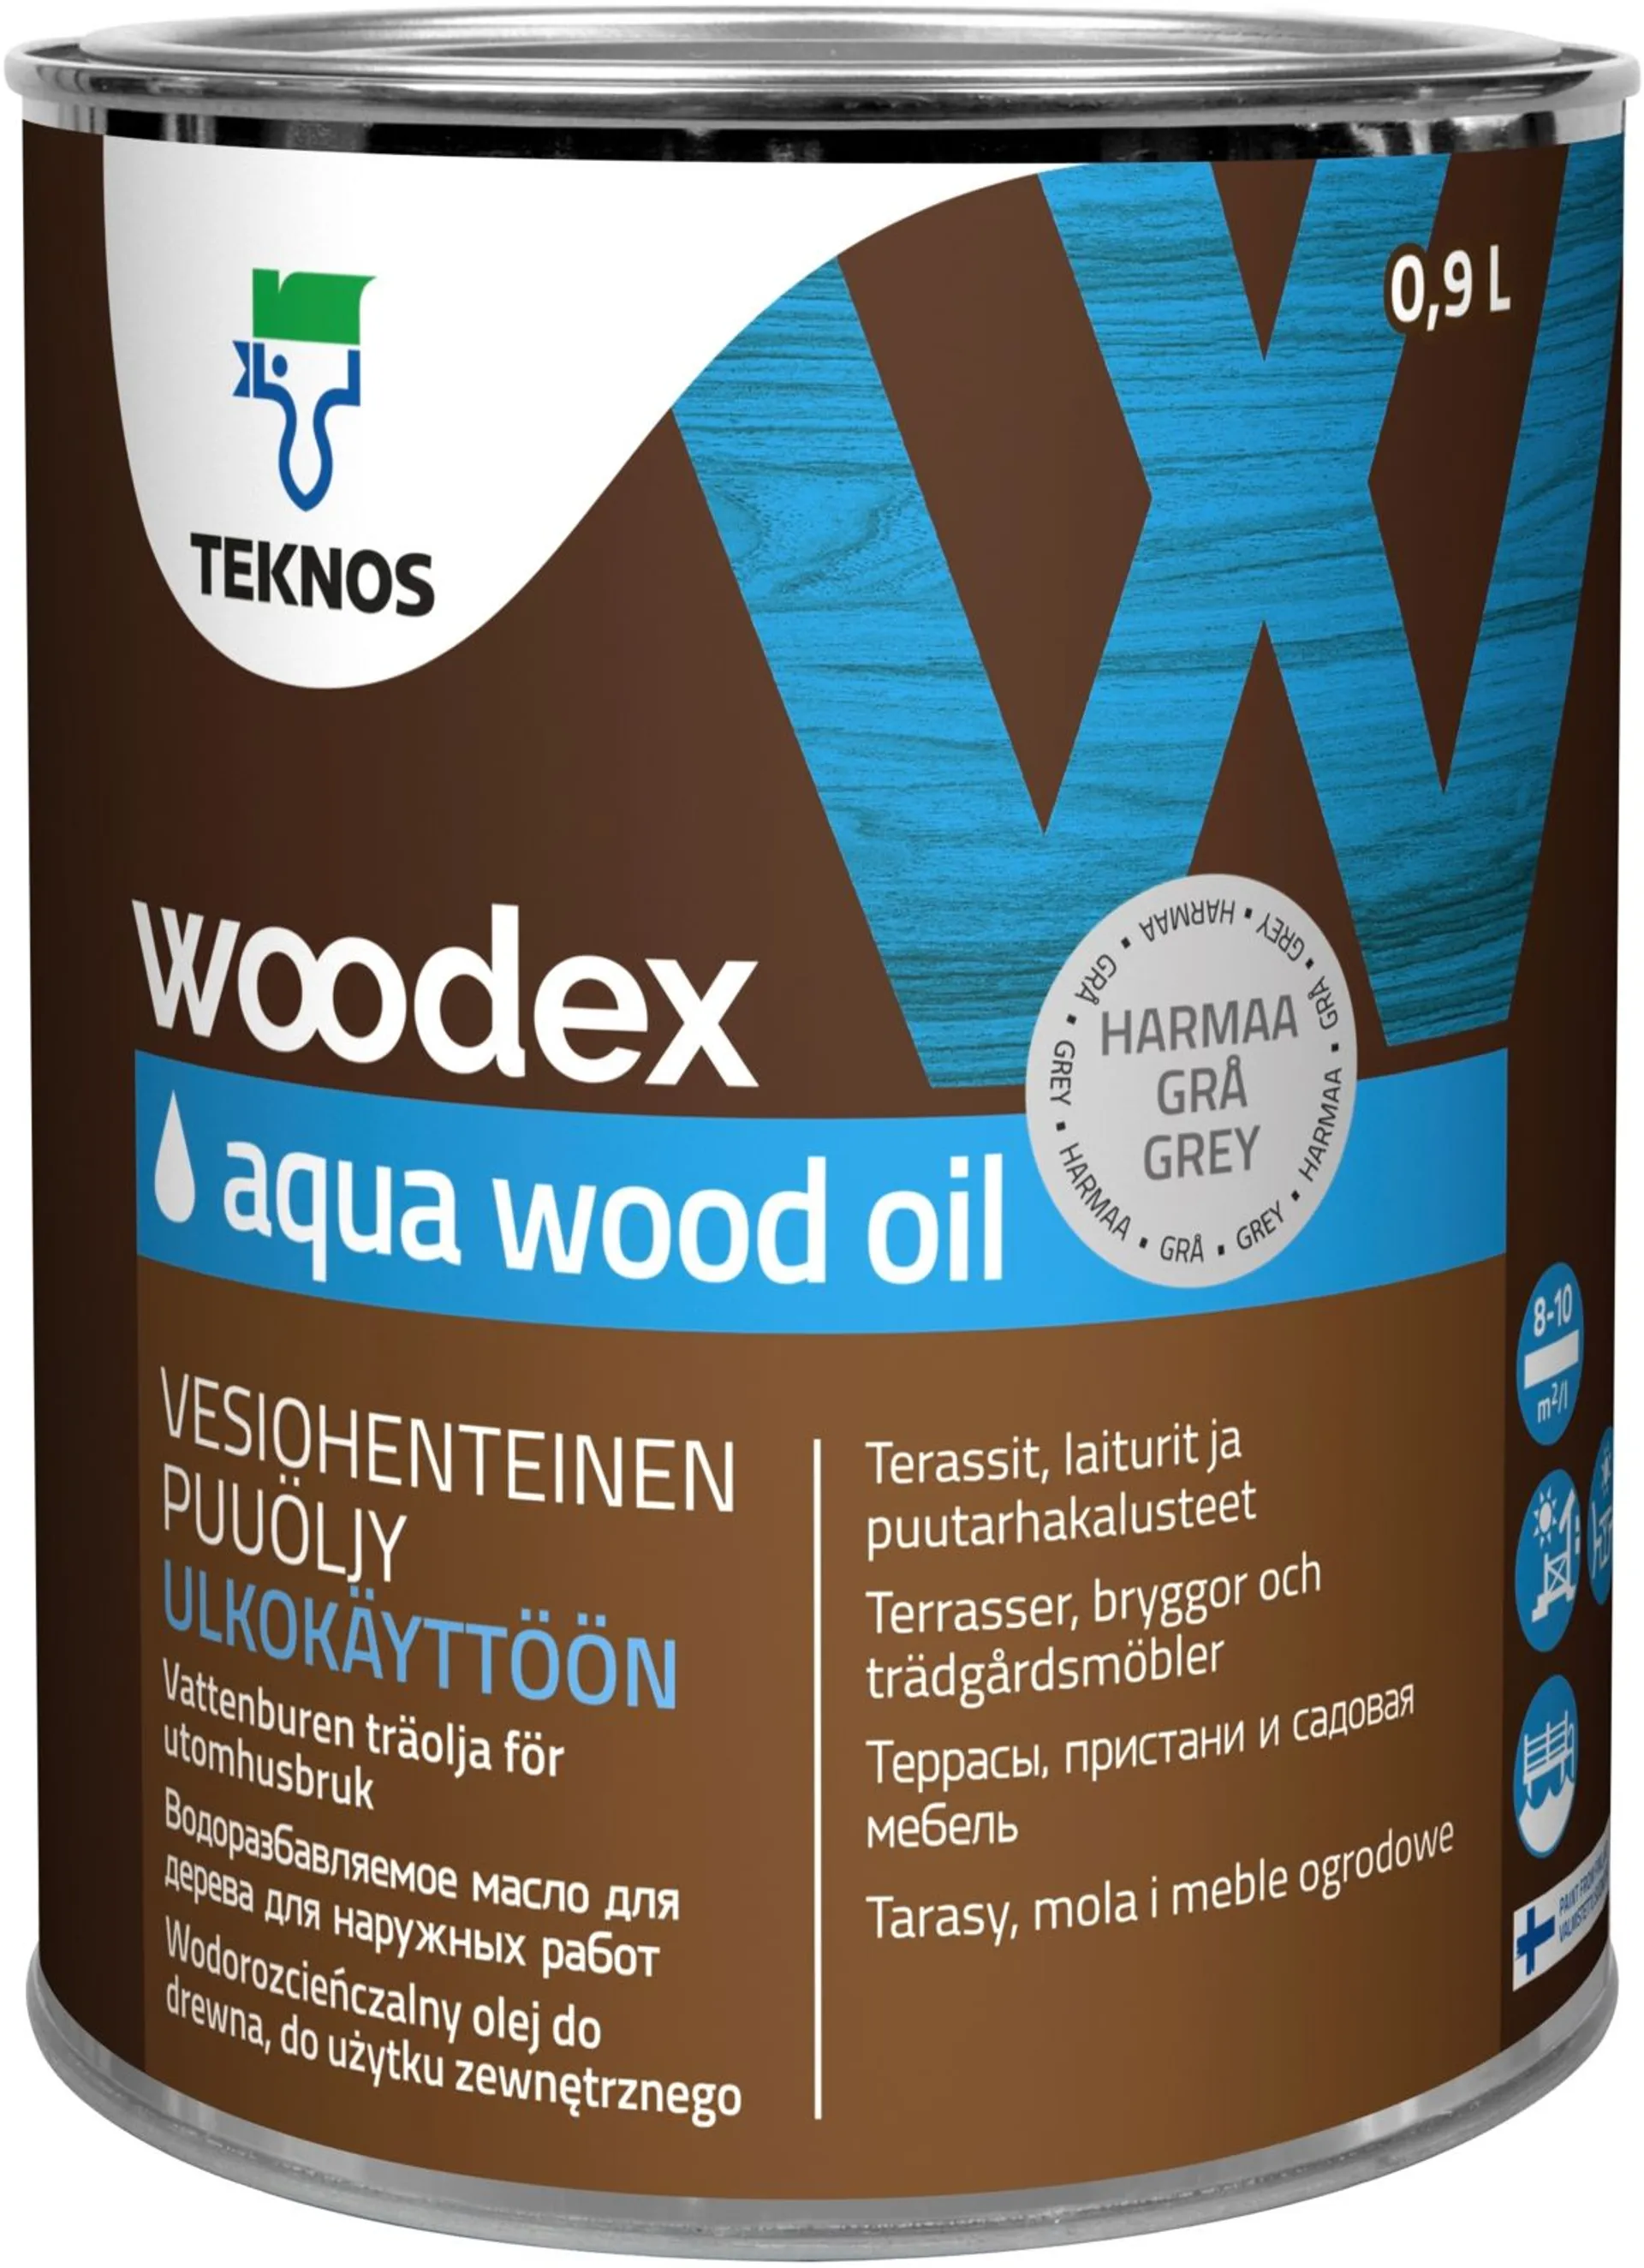 Teknos puuöljy Woodex Aqua Wood Oil 0,9 l harmaa